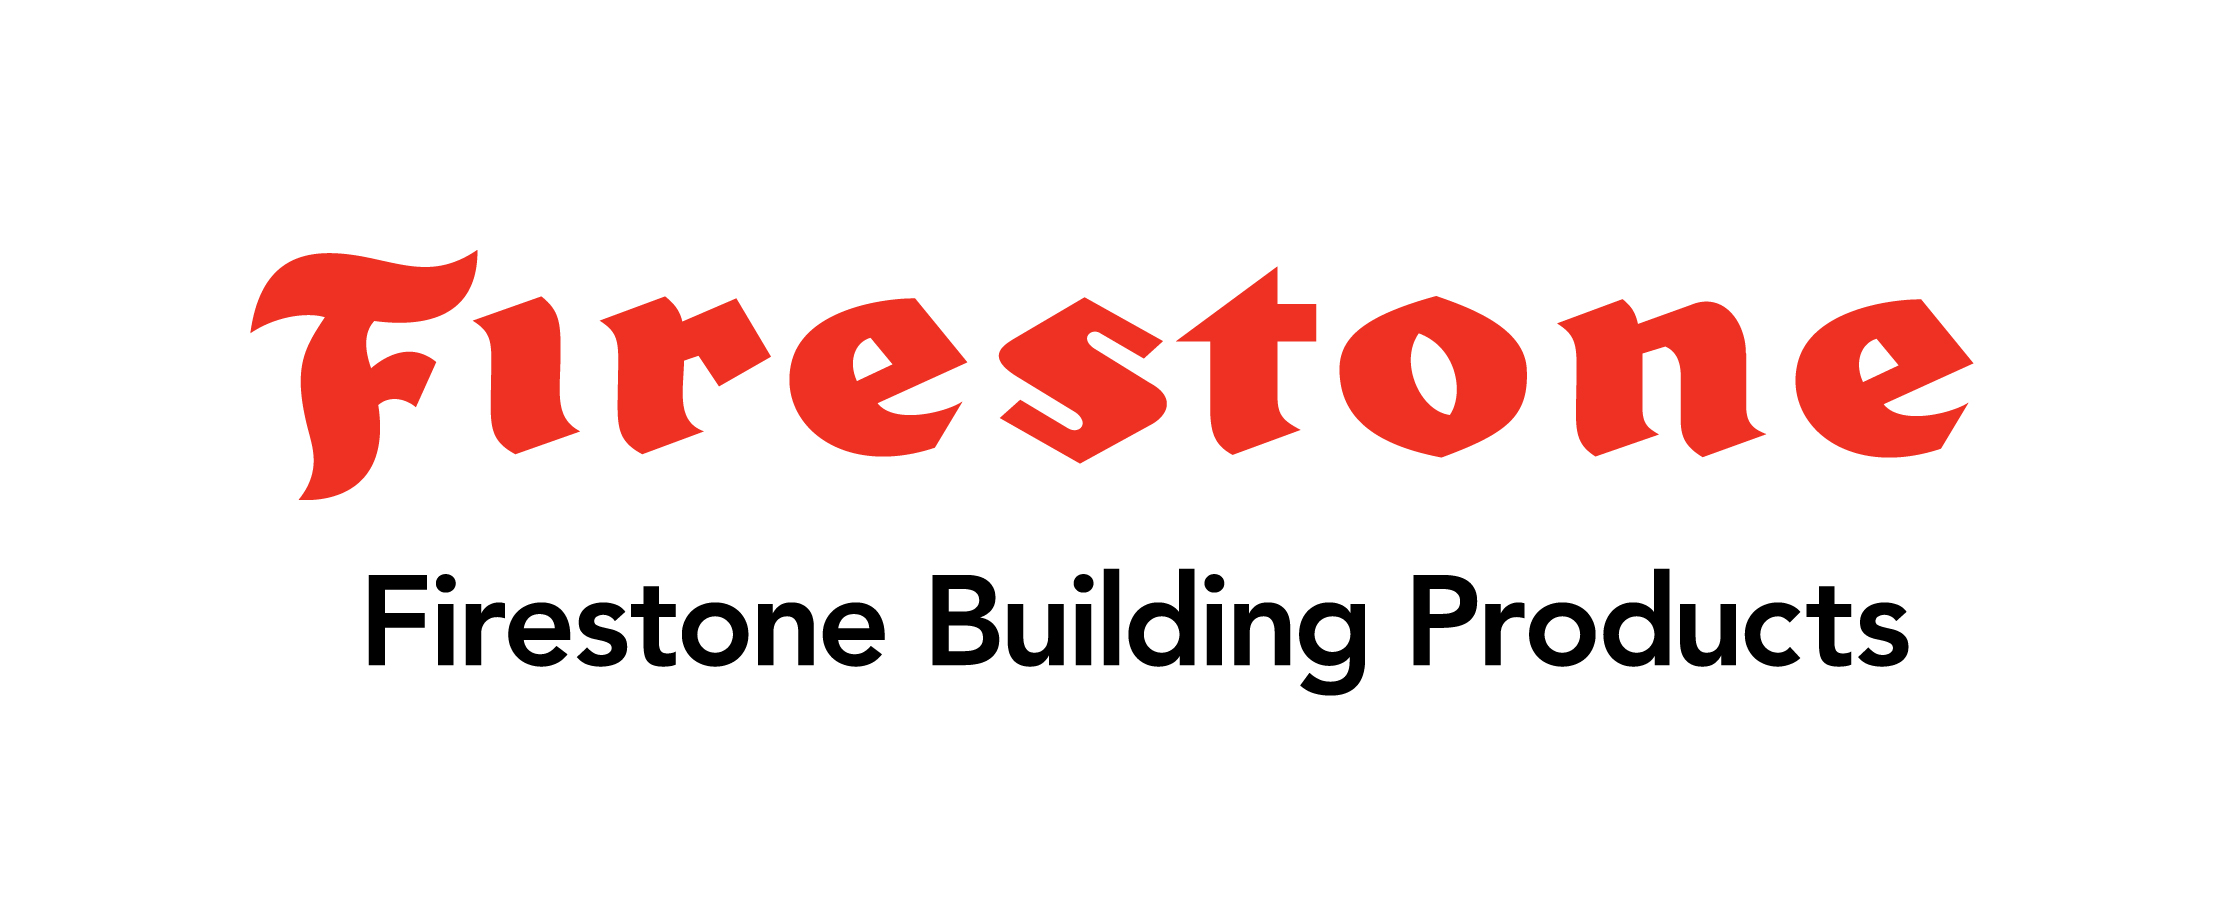 Firestone F Shield Logo - Bridgestone Brands Logos